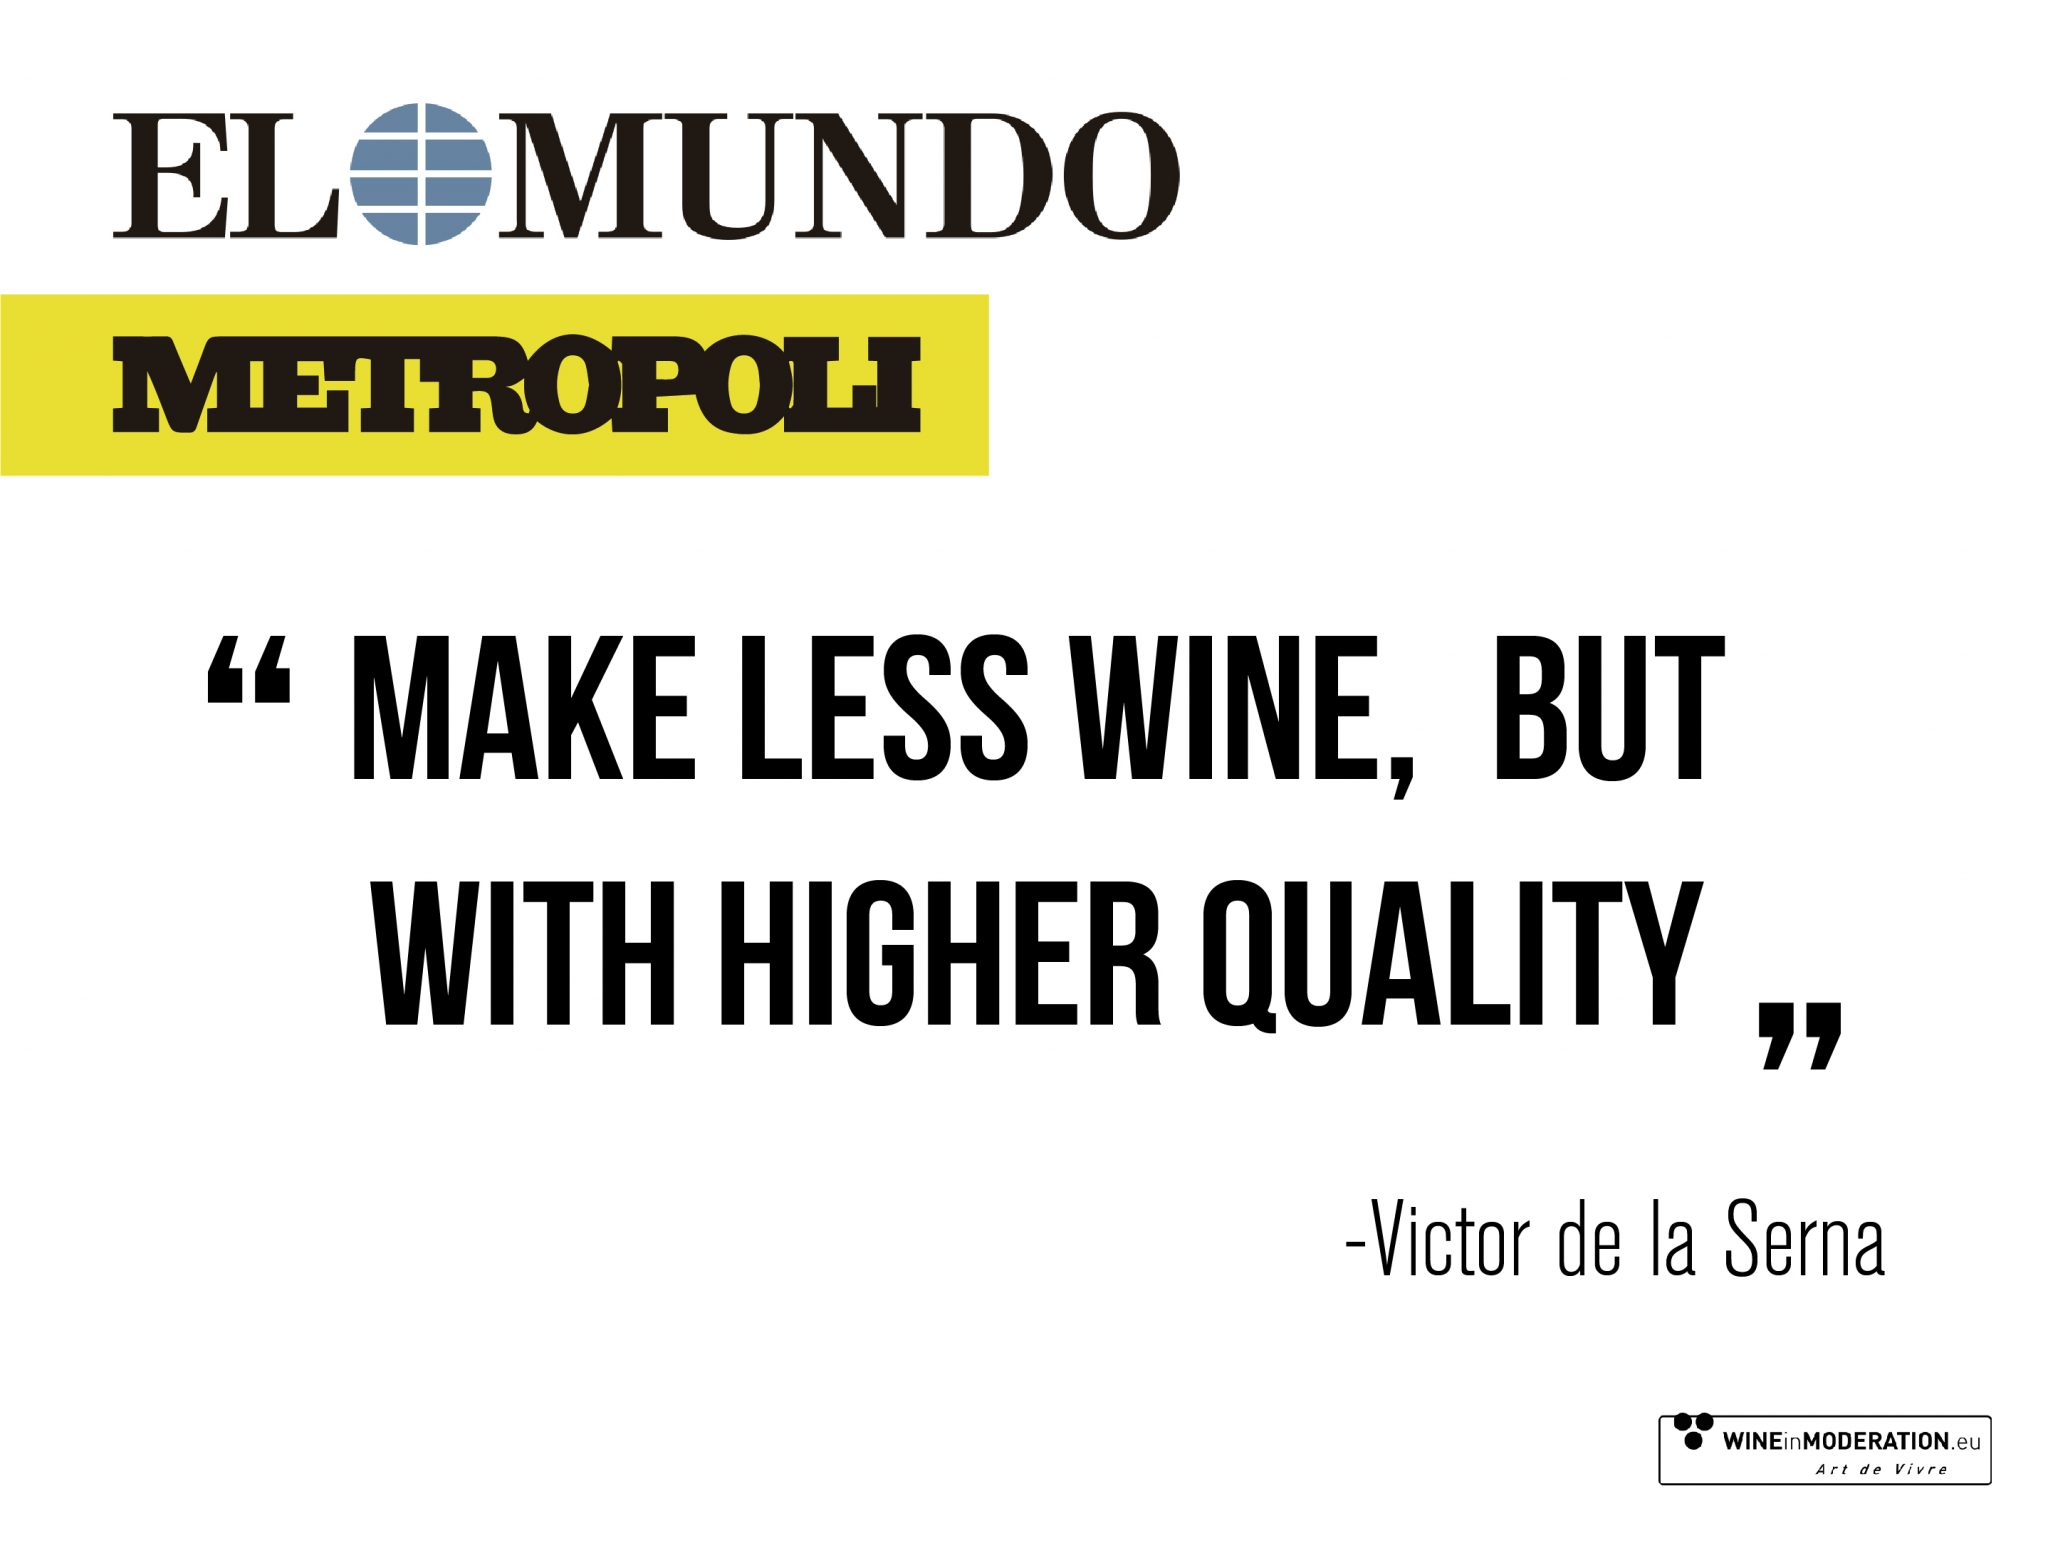 Wine tasting with Víctor de la Serna from El Mundo